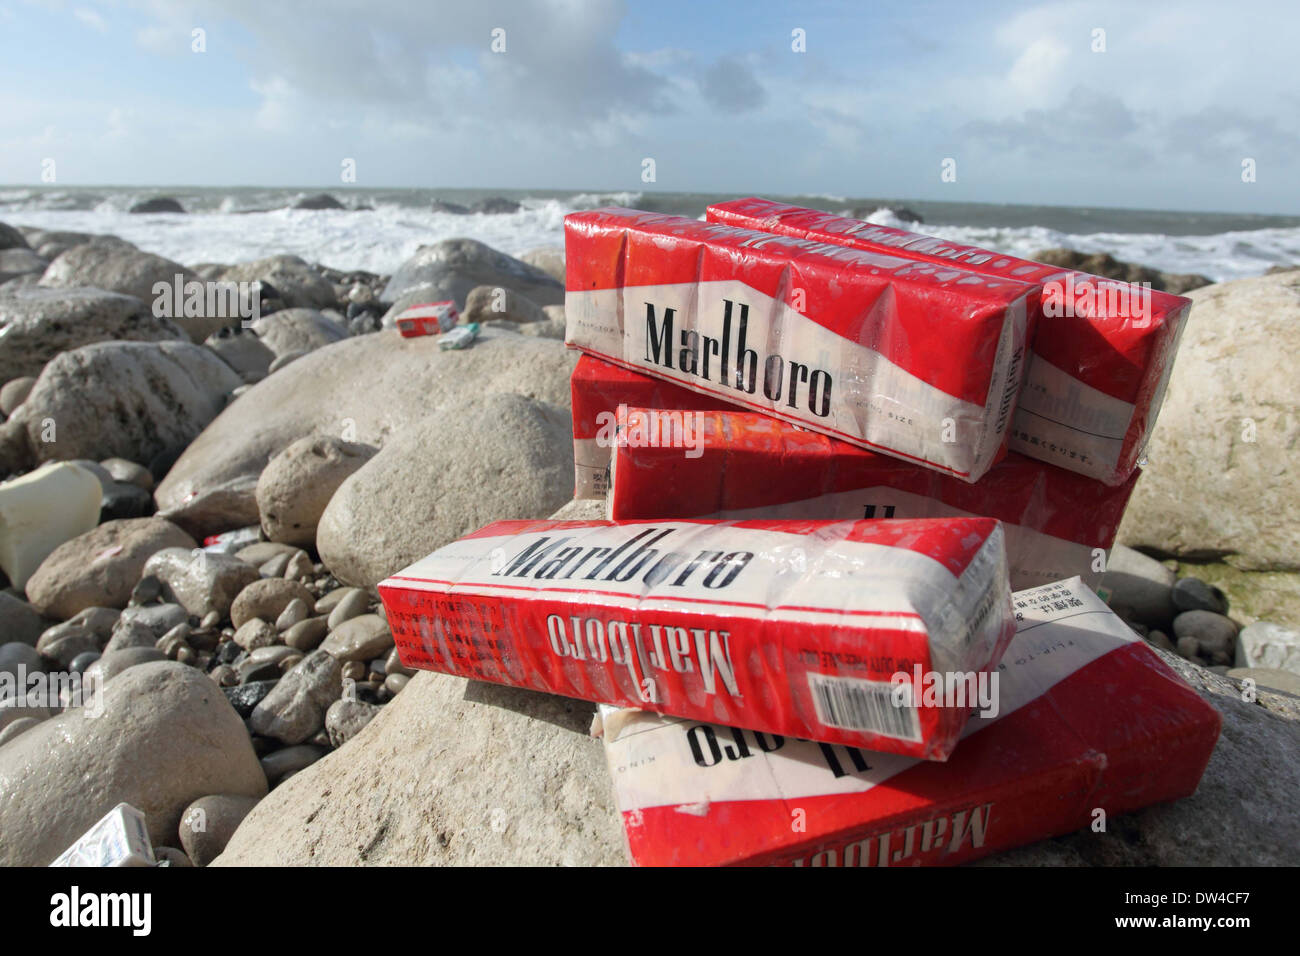 Zigaretten am Strand nach Container Spill, Chesil beach Dorset, Portland UK Stockfoto